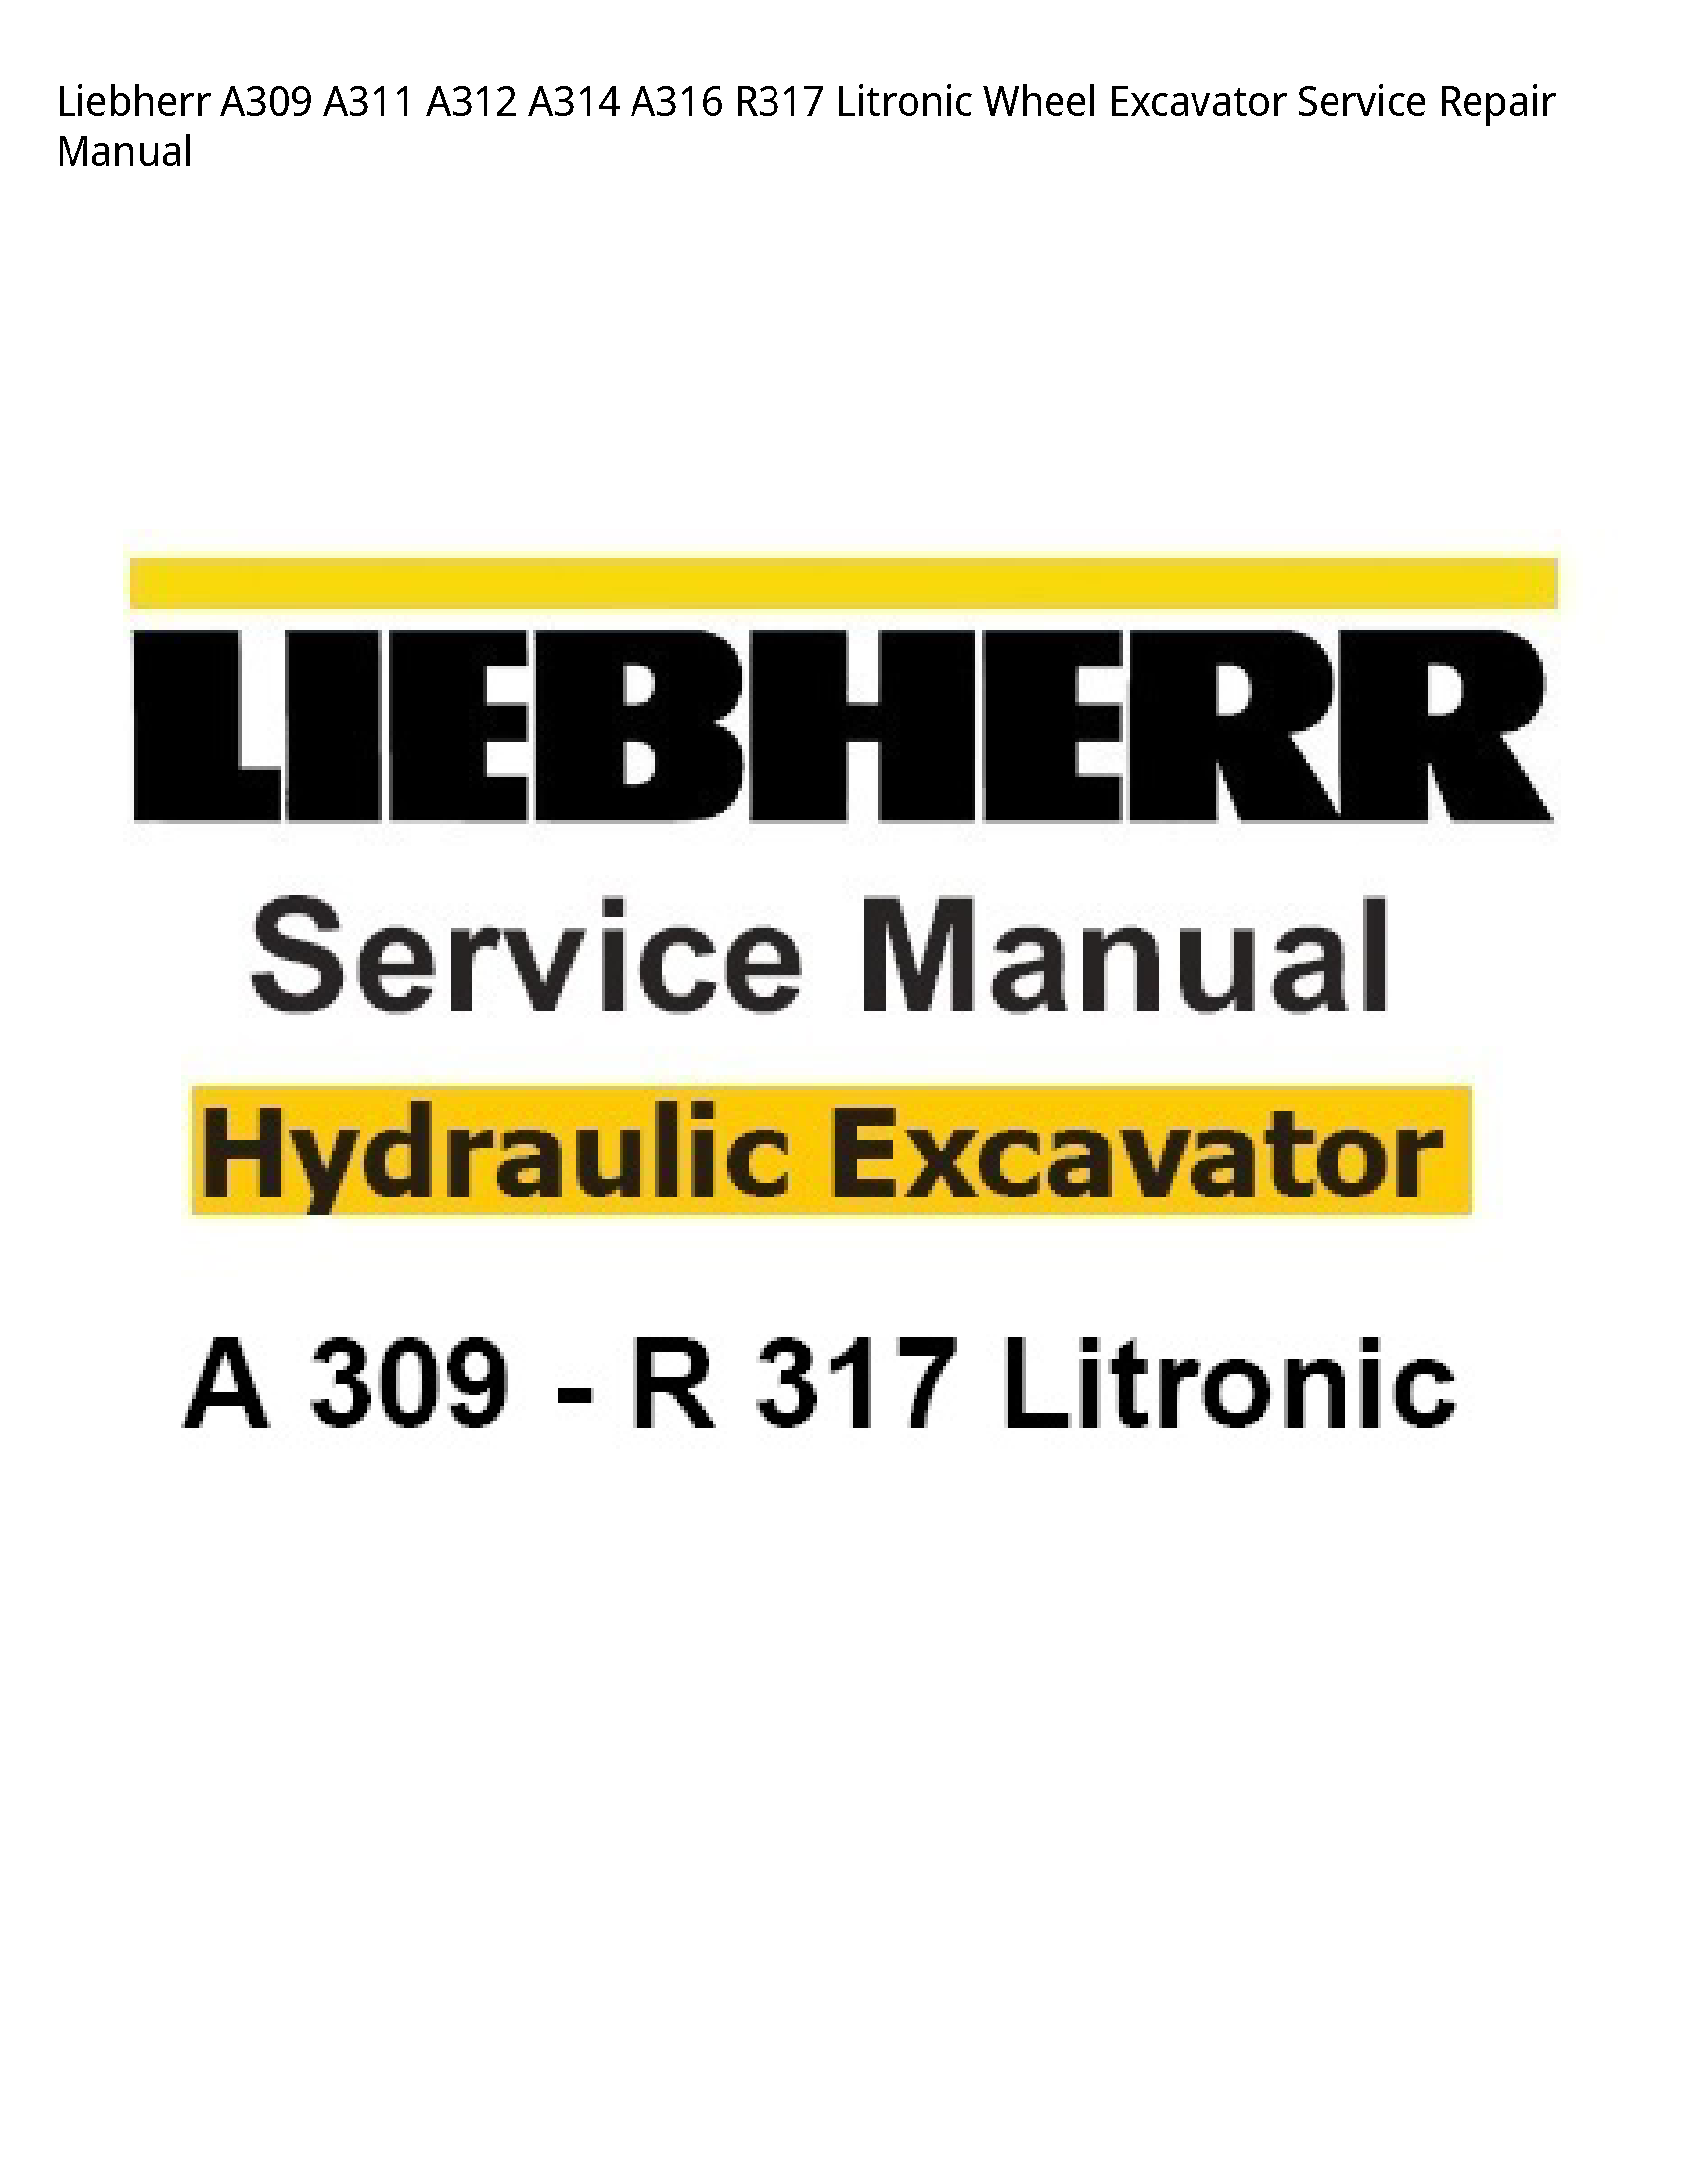 Liebherr A309 Litronic Wheel Excavator manual